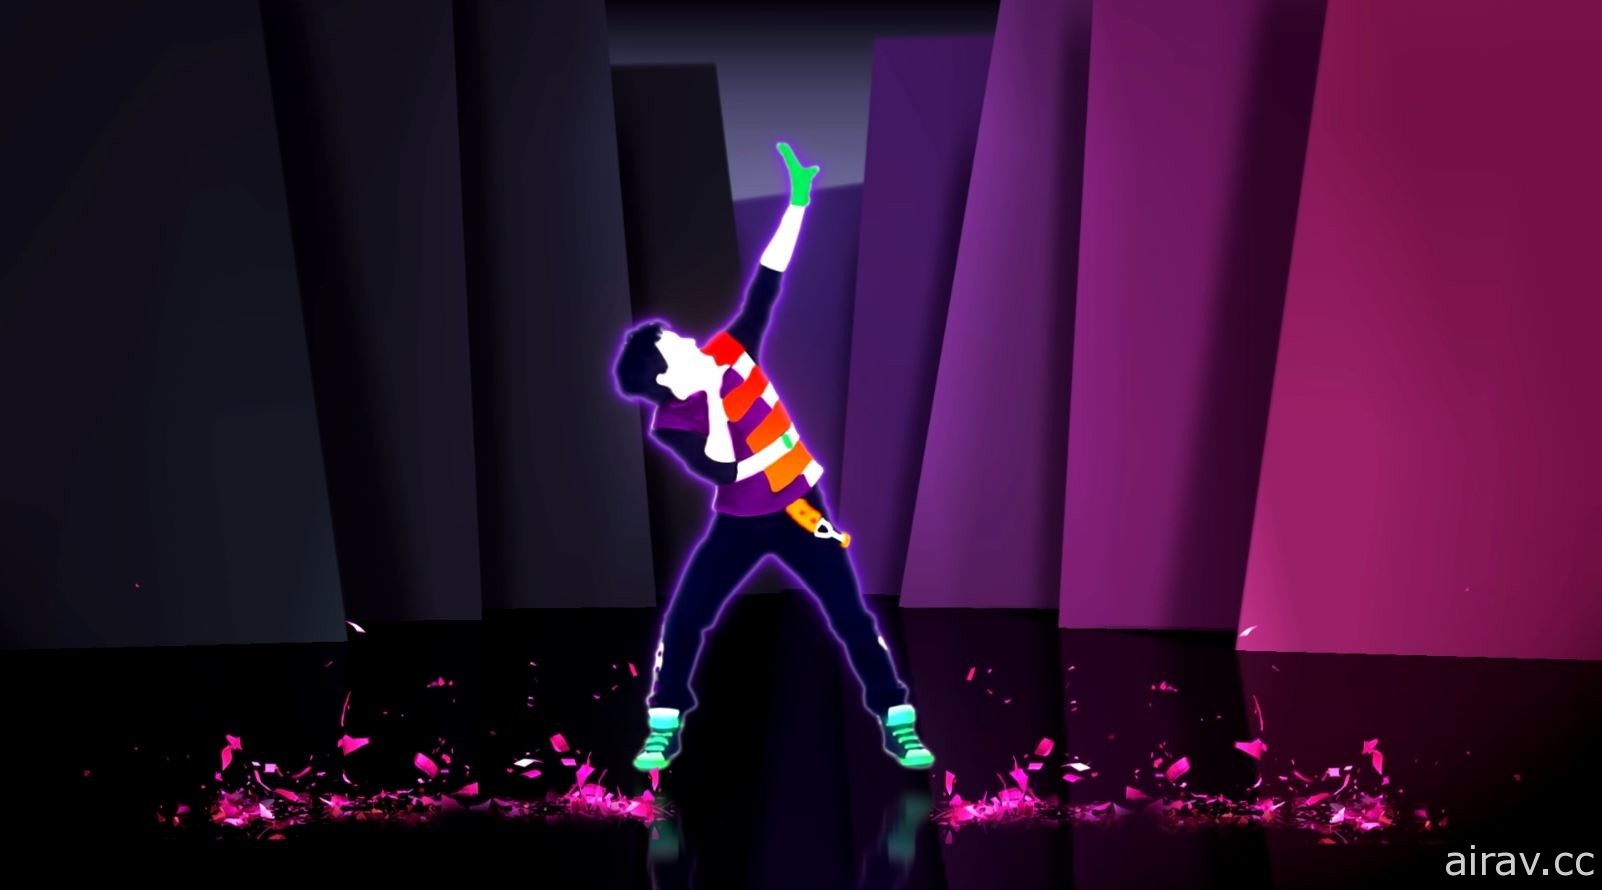 《Just Dance 舞力全開 2021》免費更新 第 2 季「鬥舞」現已推出